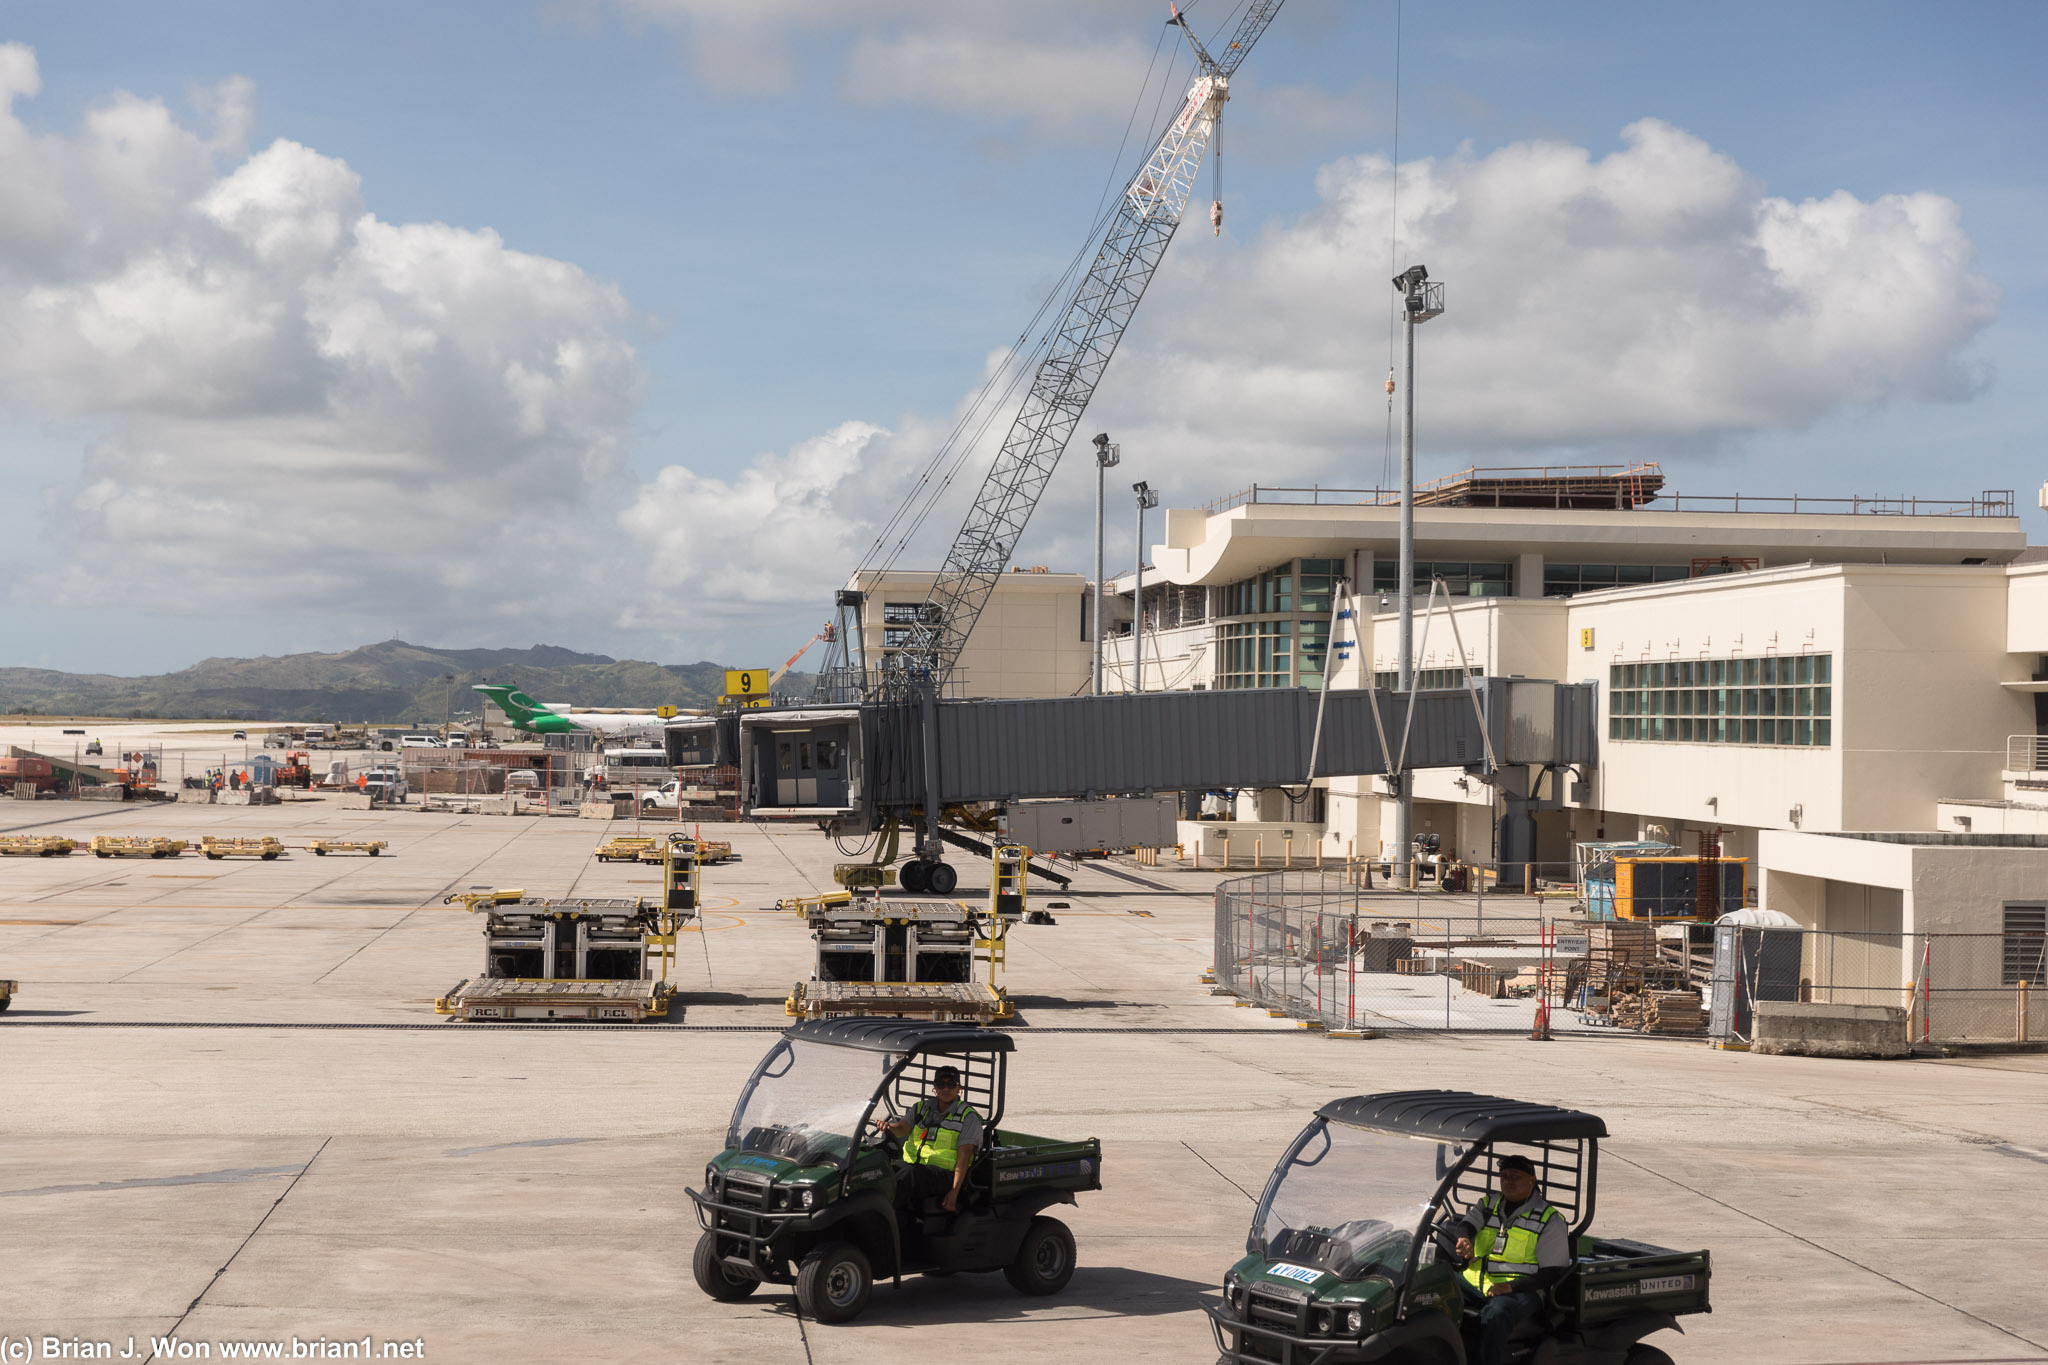 Lots of construction at Guam International Airport.